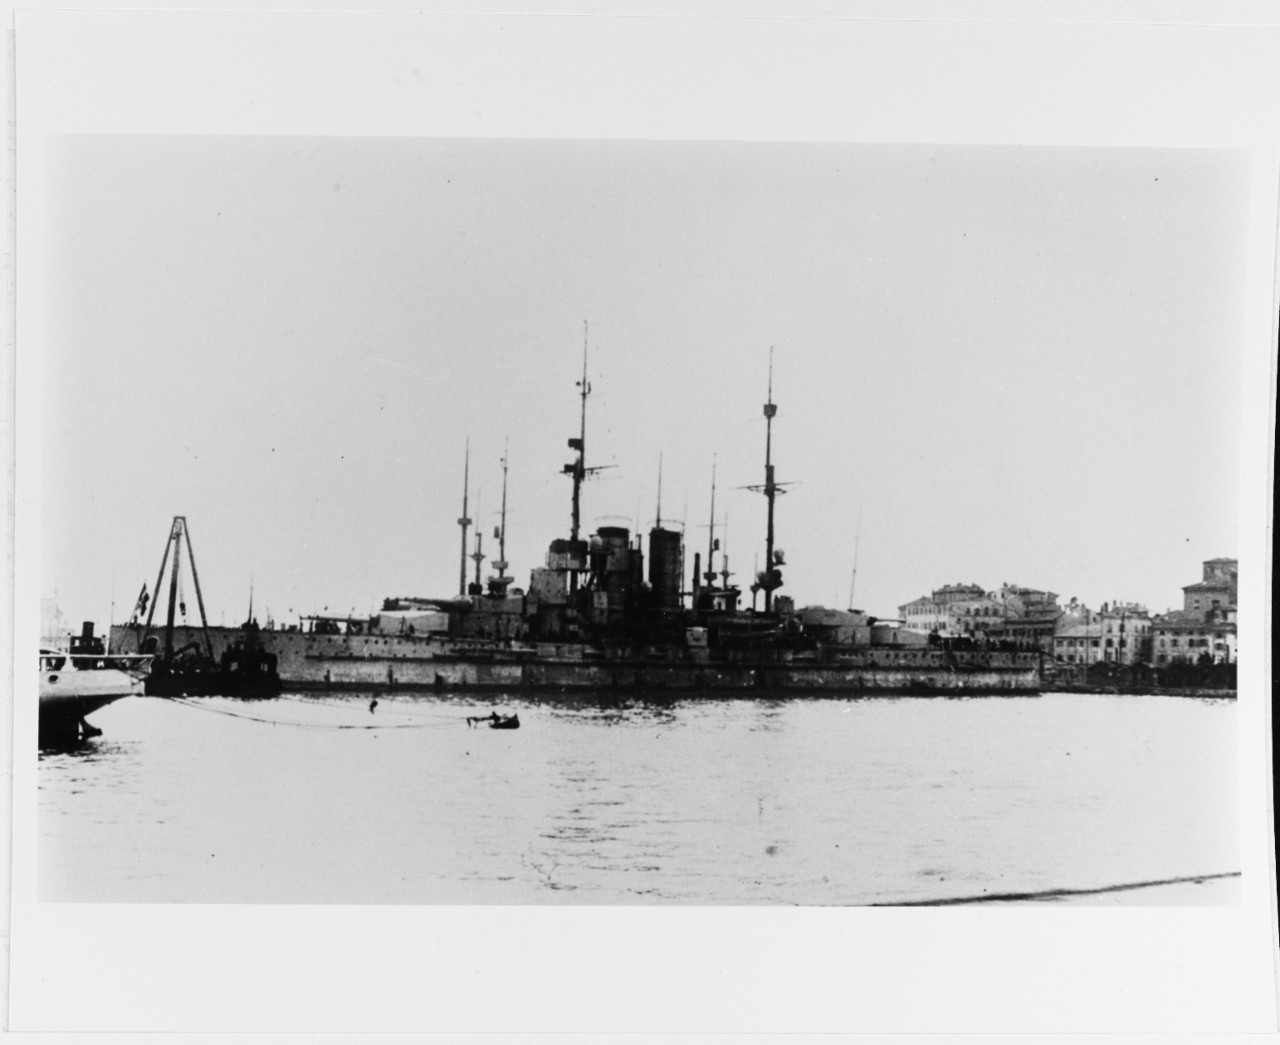 TEGETTHOFF Austrian Battleship, 1912-20